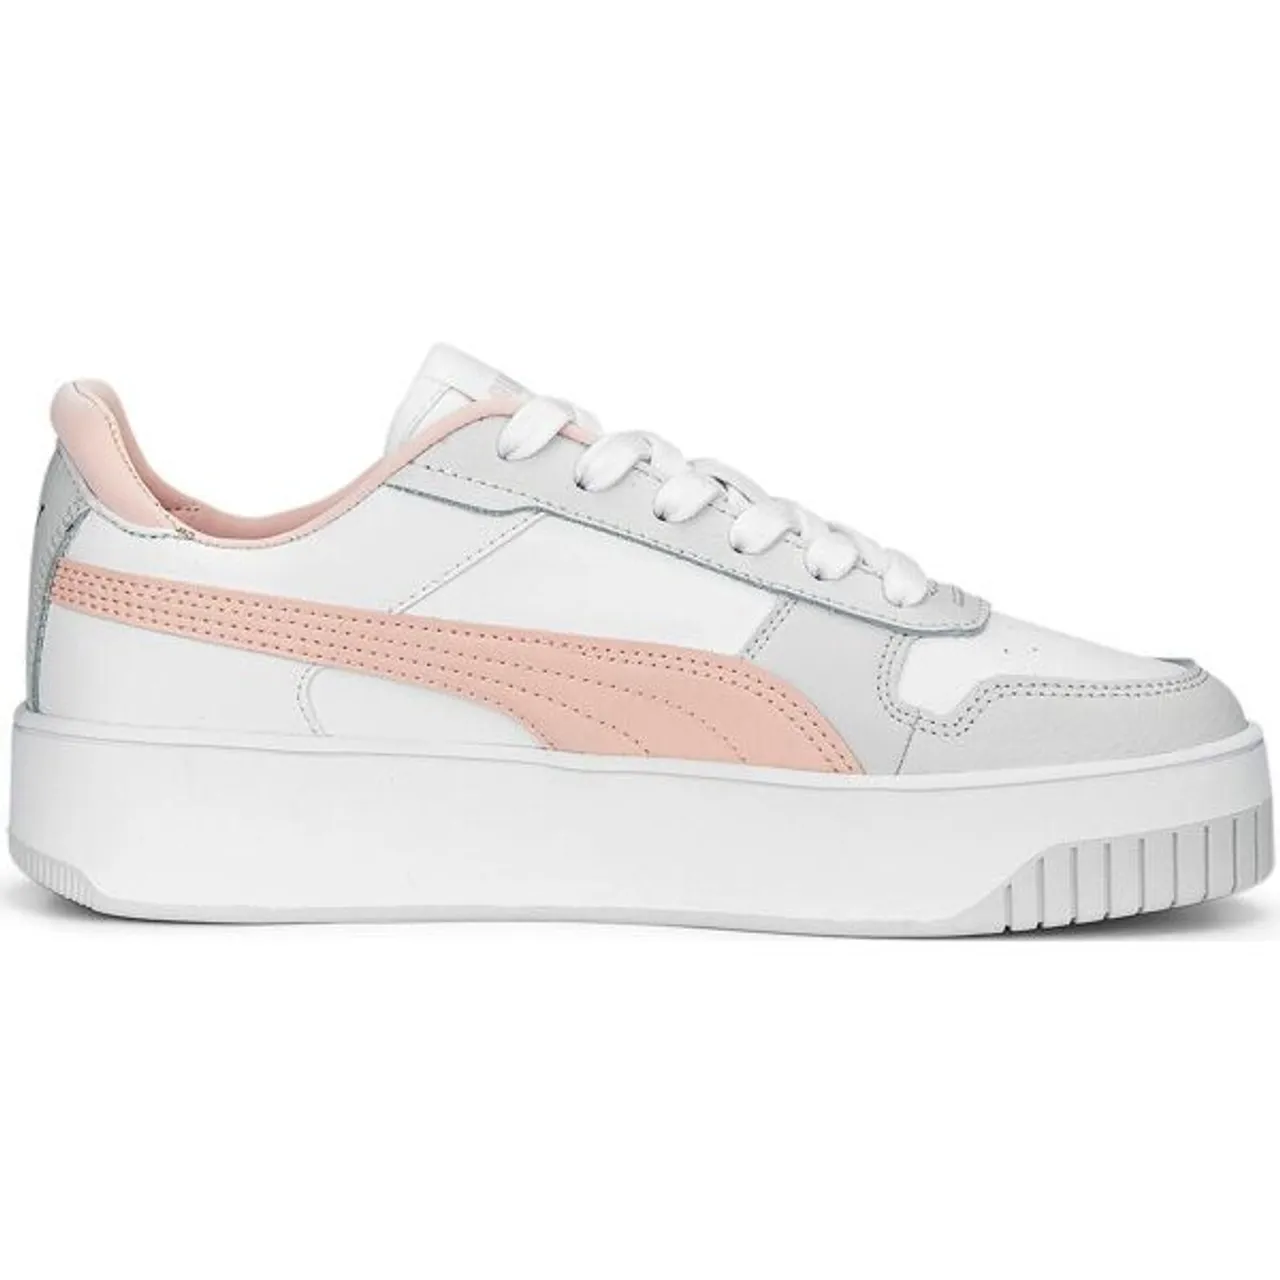 Sneaker PUMA "CARINA STREET" Gr. 39, rosa (puma white, rose dust, feather gray) Schuhe Sneaker